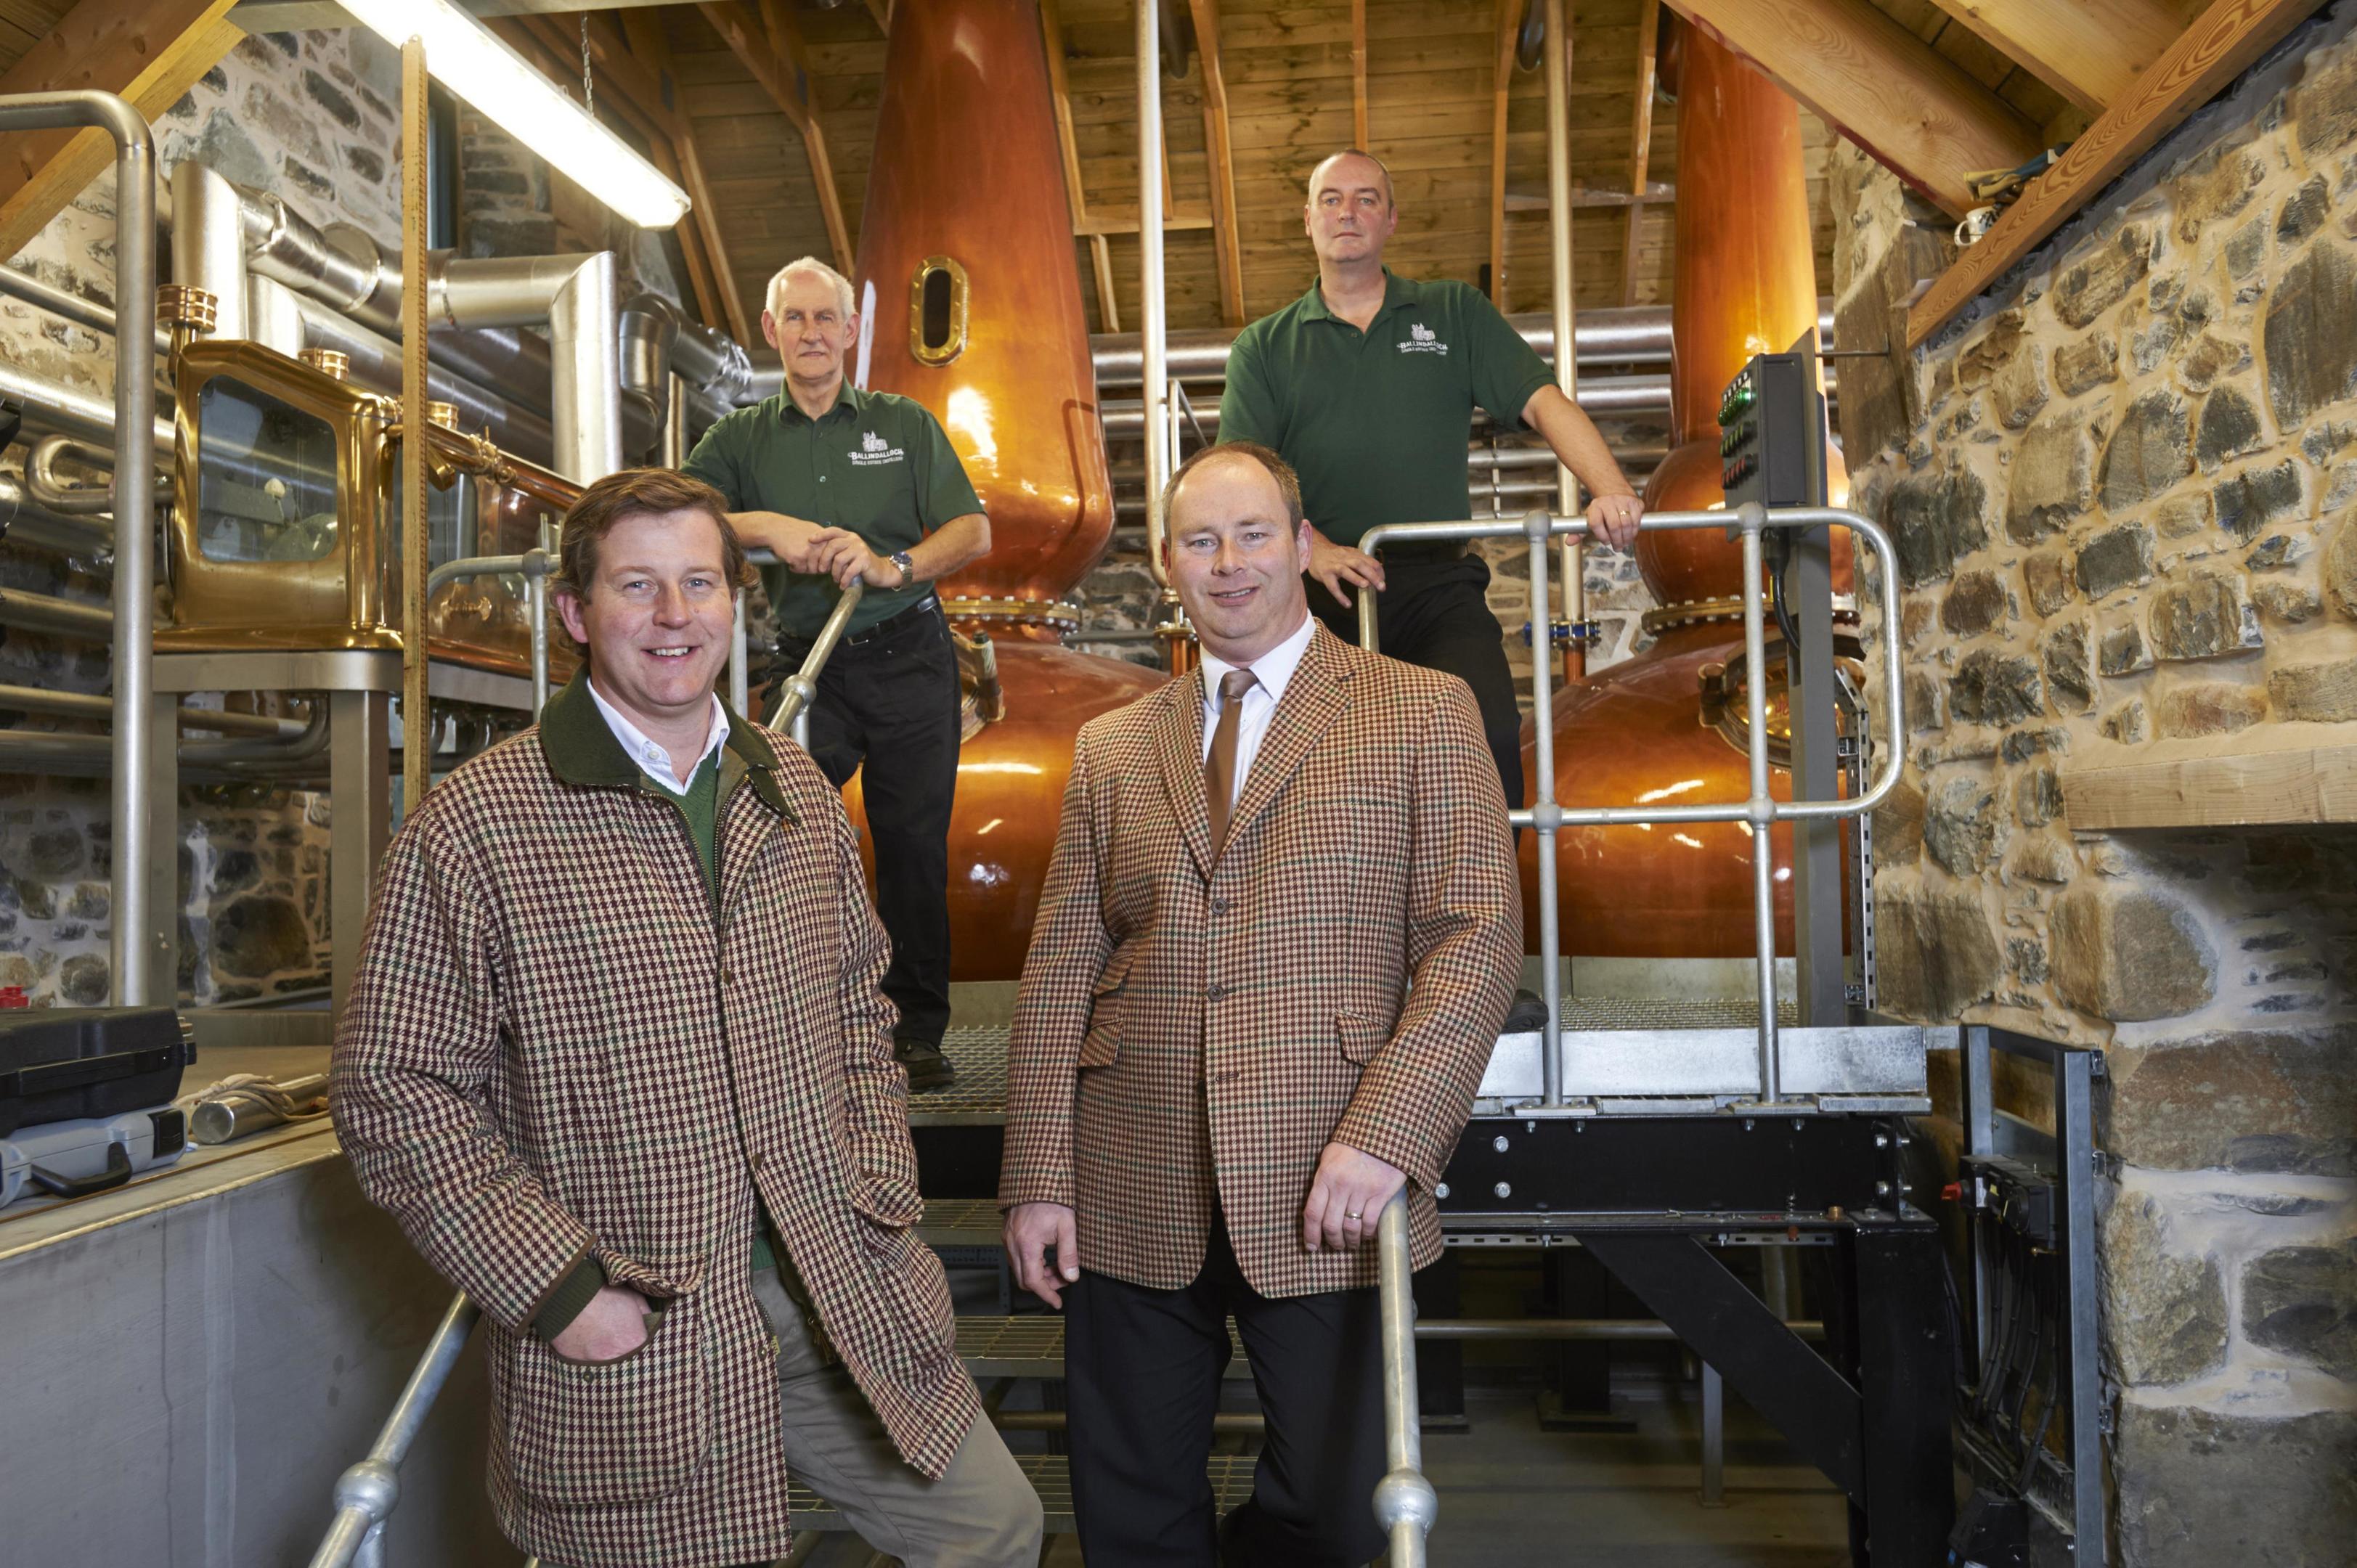 LtoR-Guy-Macpherson-Grant-Charlie-Smith-Master-Distiller-Brian-Robinson-and-Colin-Poppy-Distillery-Assistant.jpg